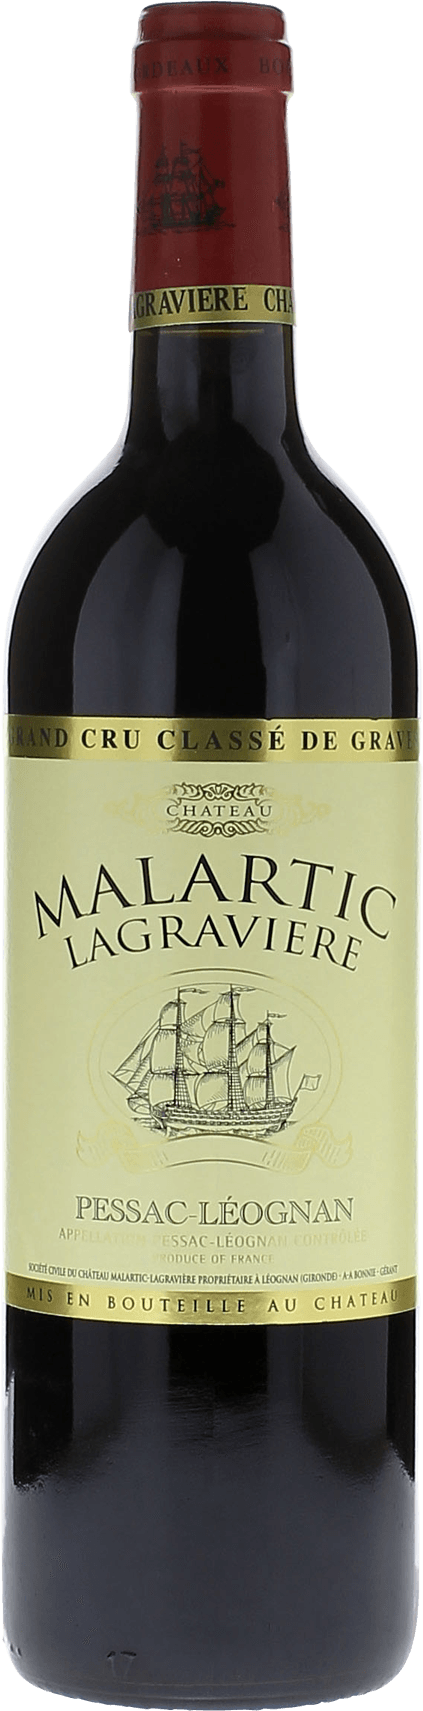 Malartic lagraviere rouge 2004 Grand Cru Class Graves, Bordeaux rouge